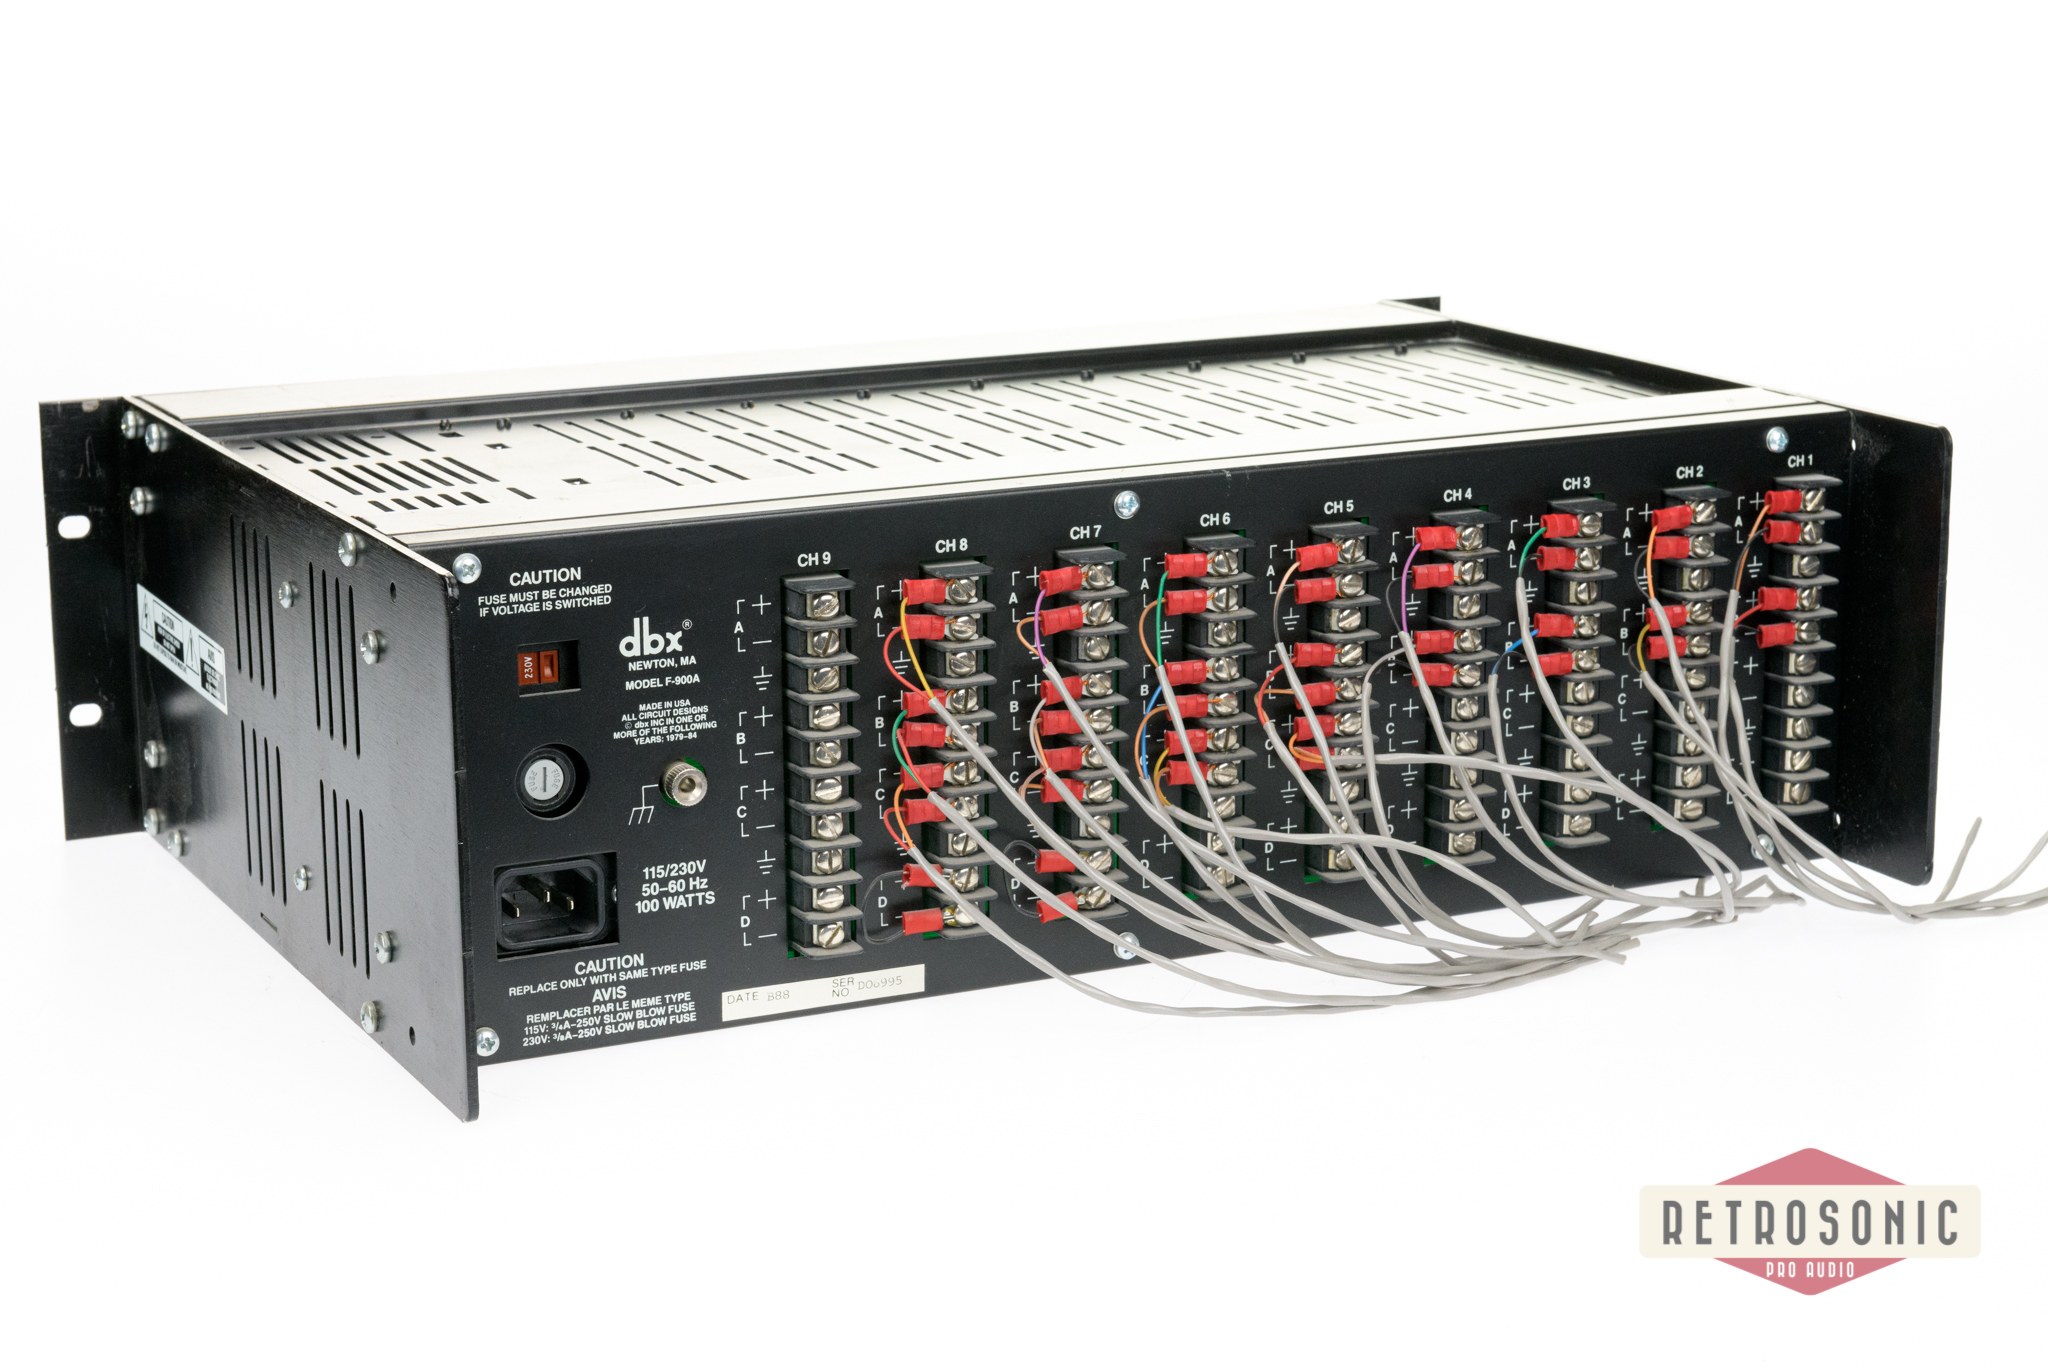 DBX 900 9-Slot Rack